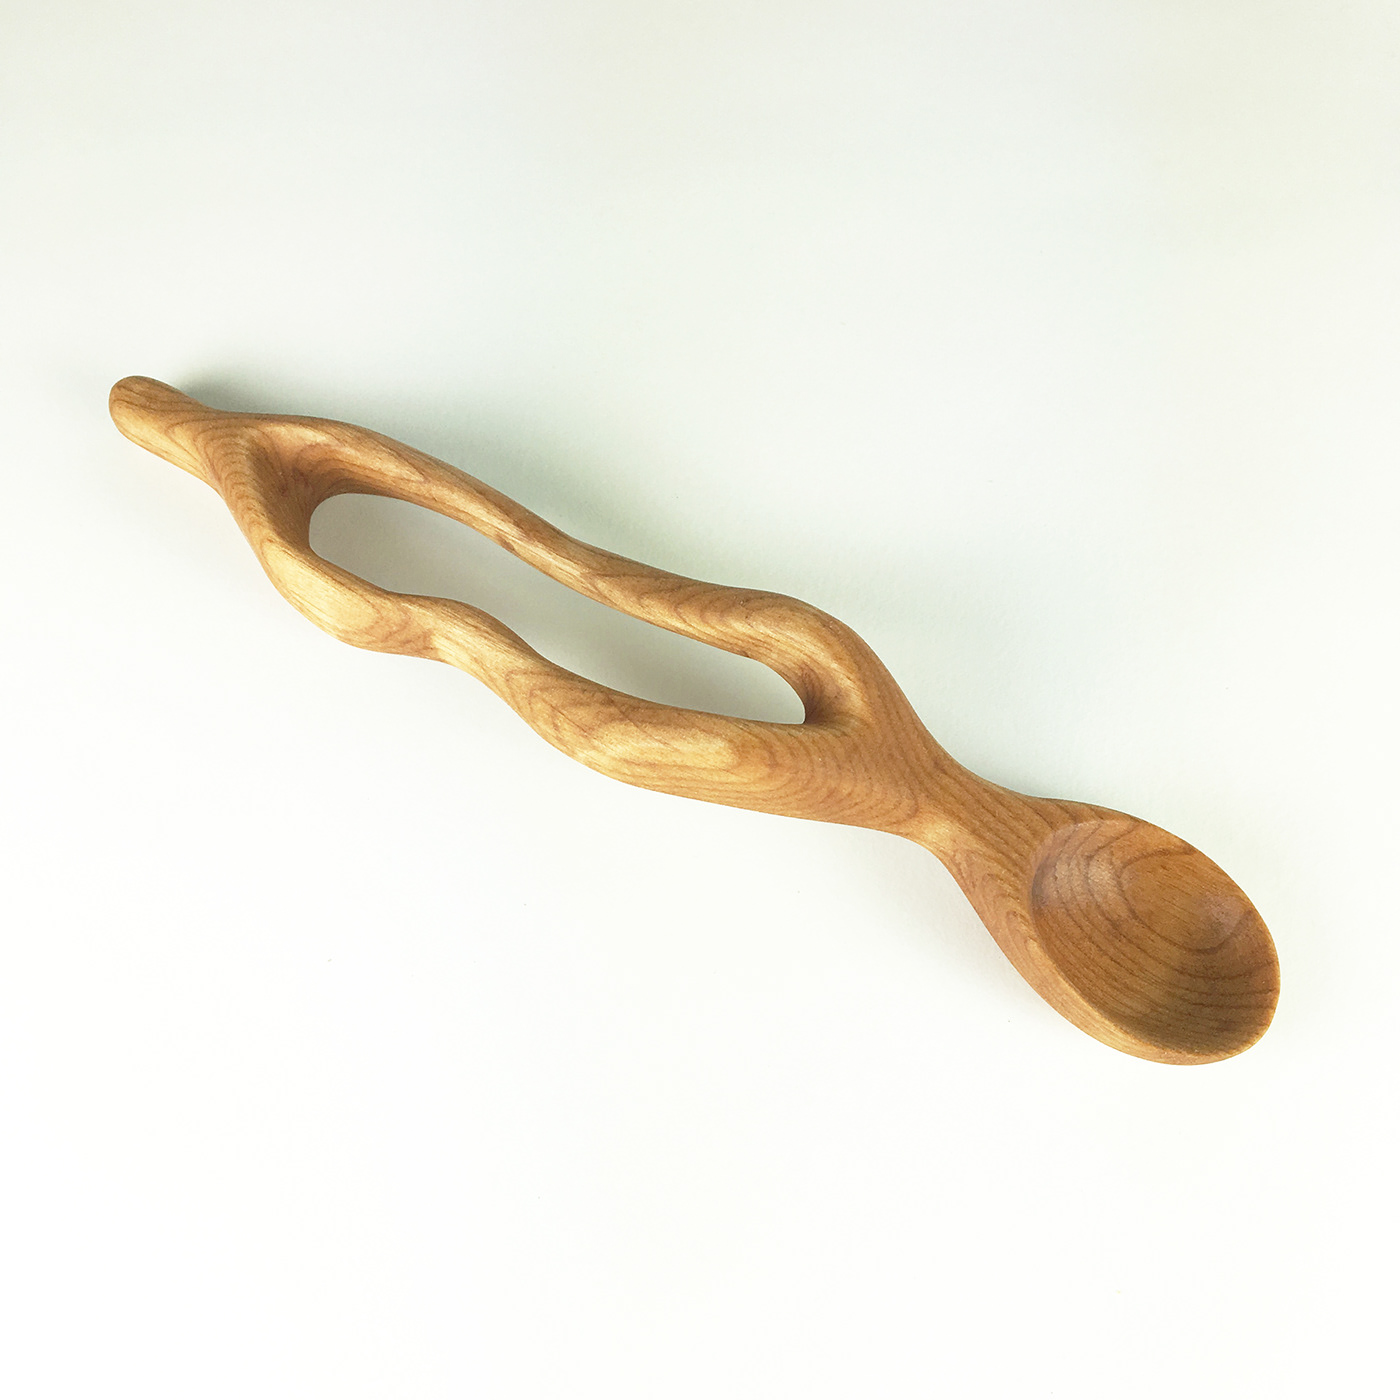 wood handcraft craftsmenship spoon design